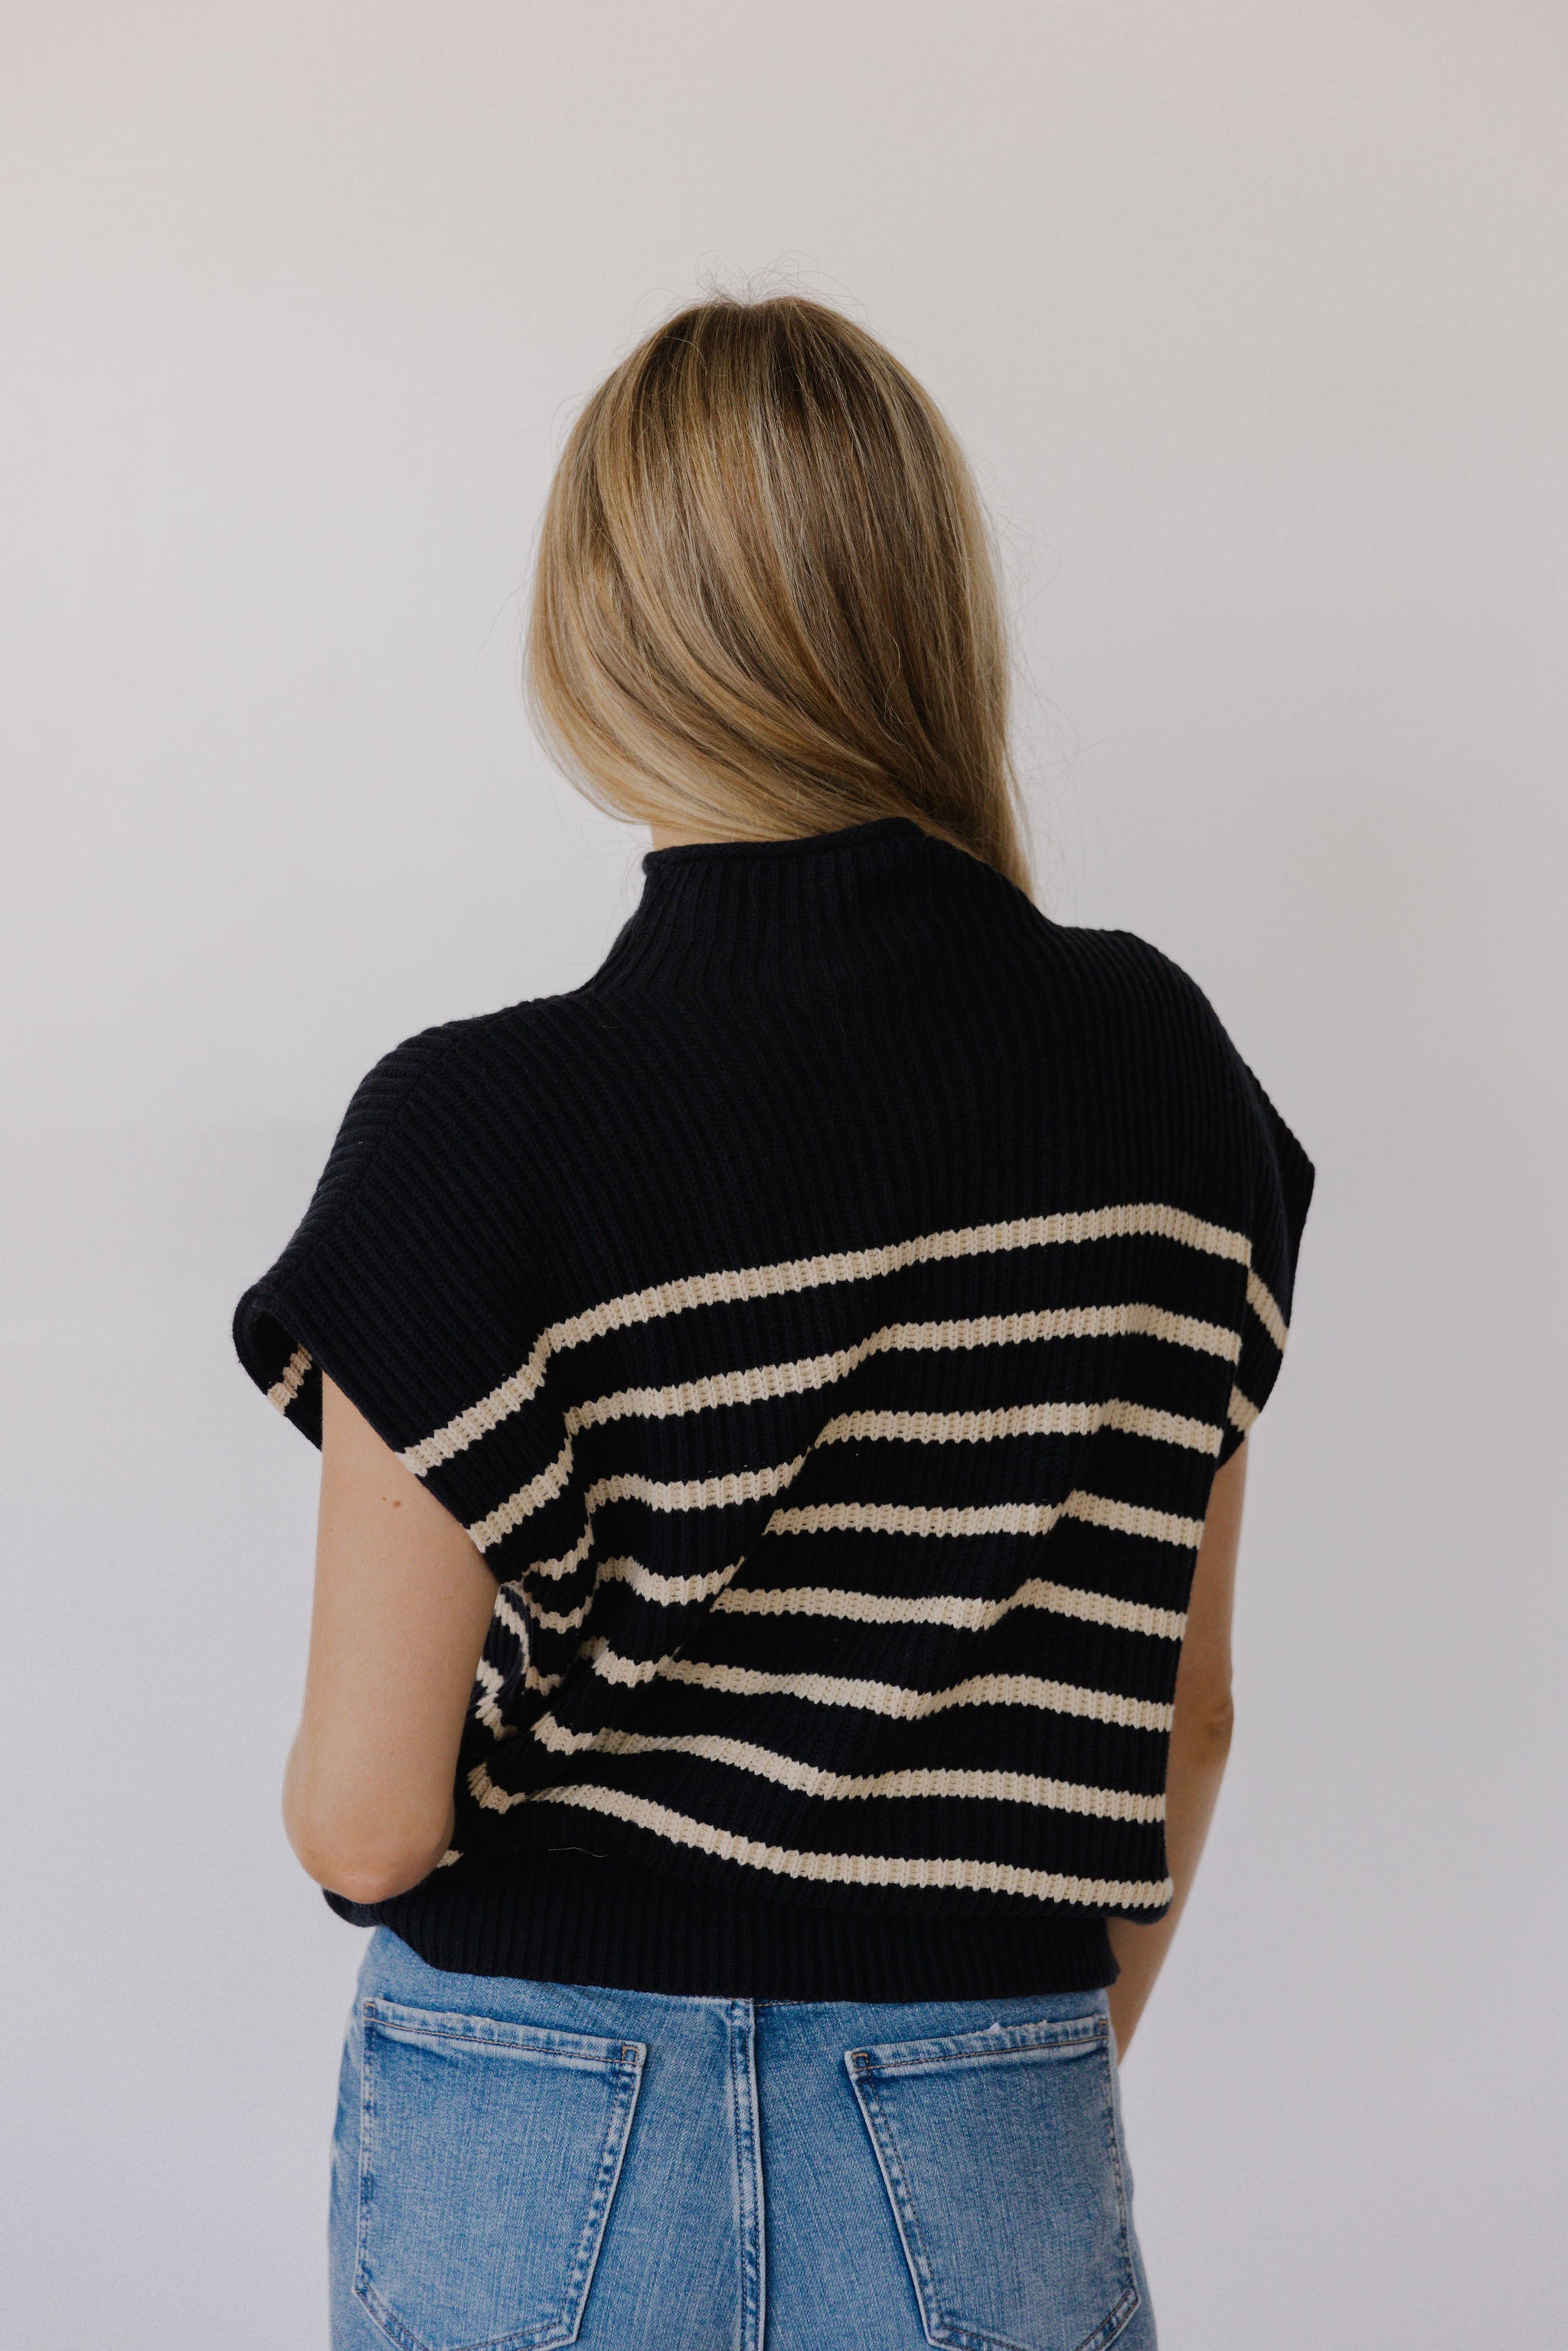 Sydney Sweater